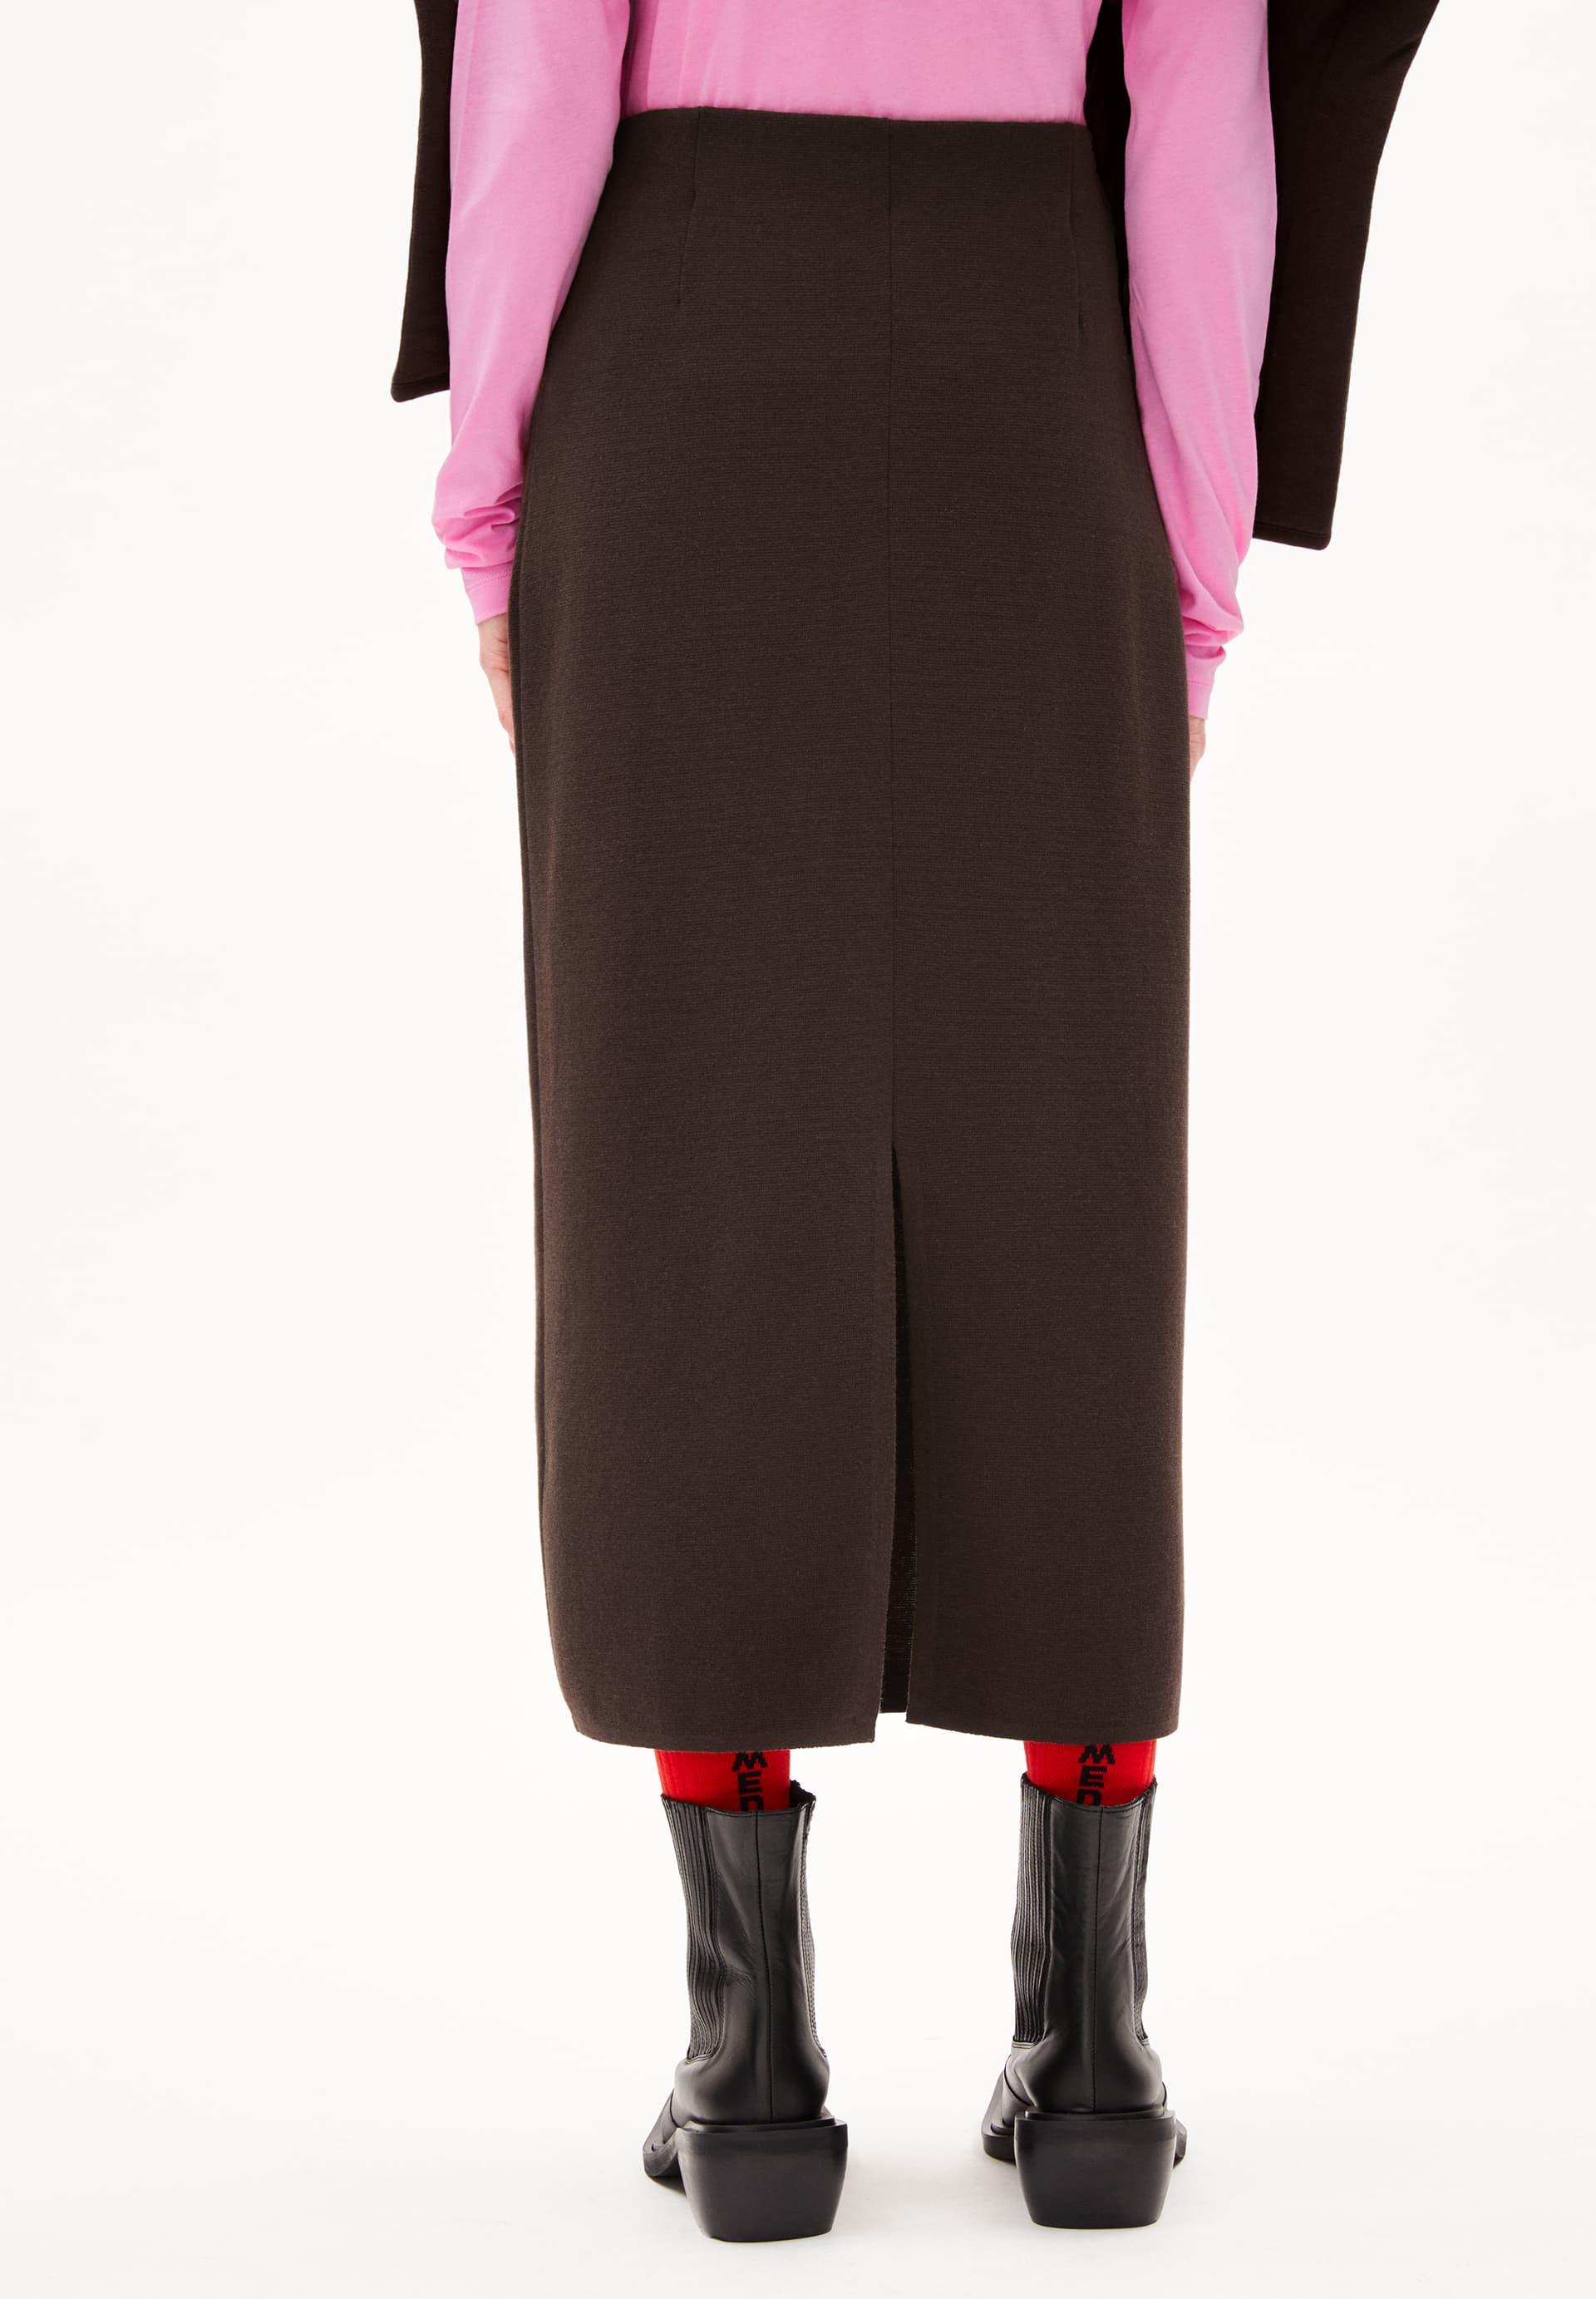 MILANAAS Knit Skirt Slim Fit made of TENCEL™ Lyocell Mix